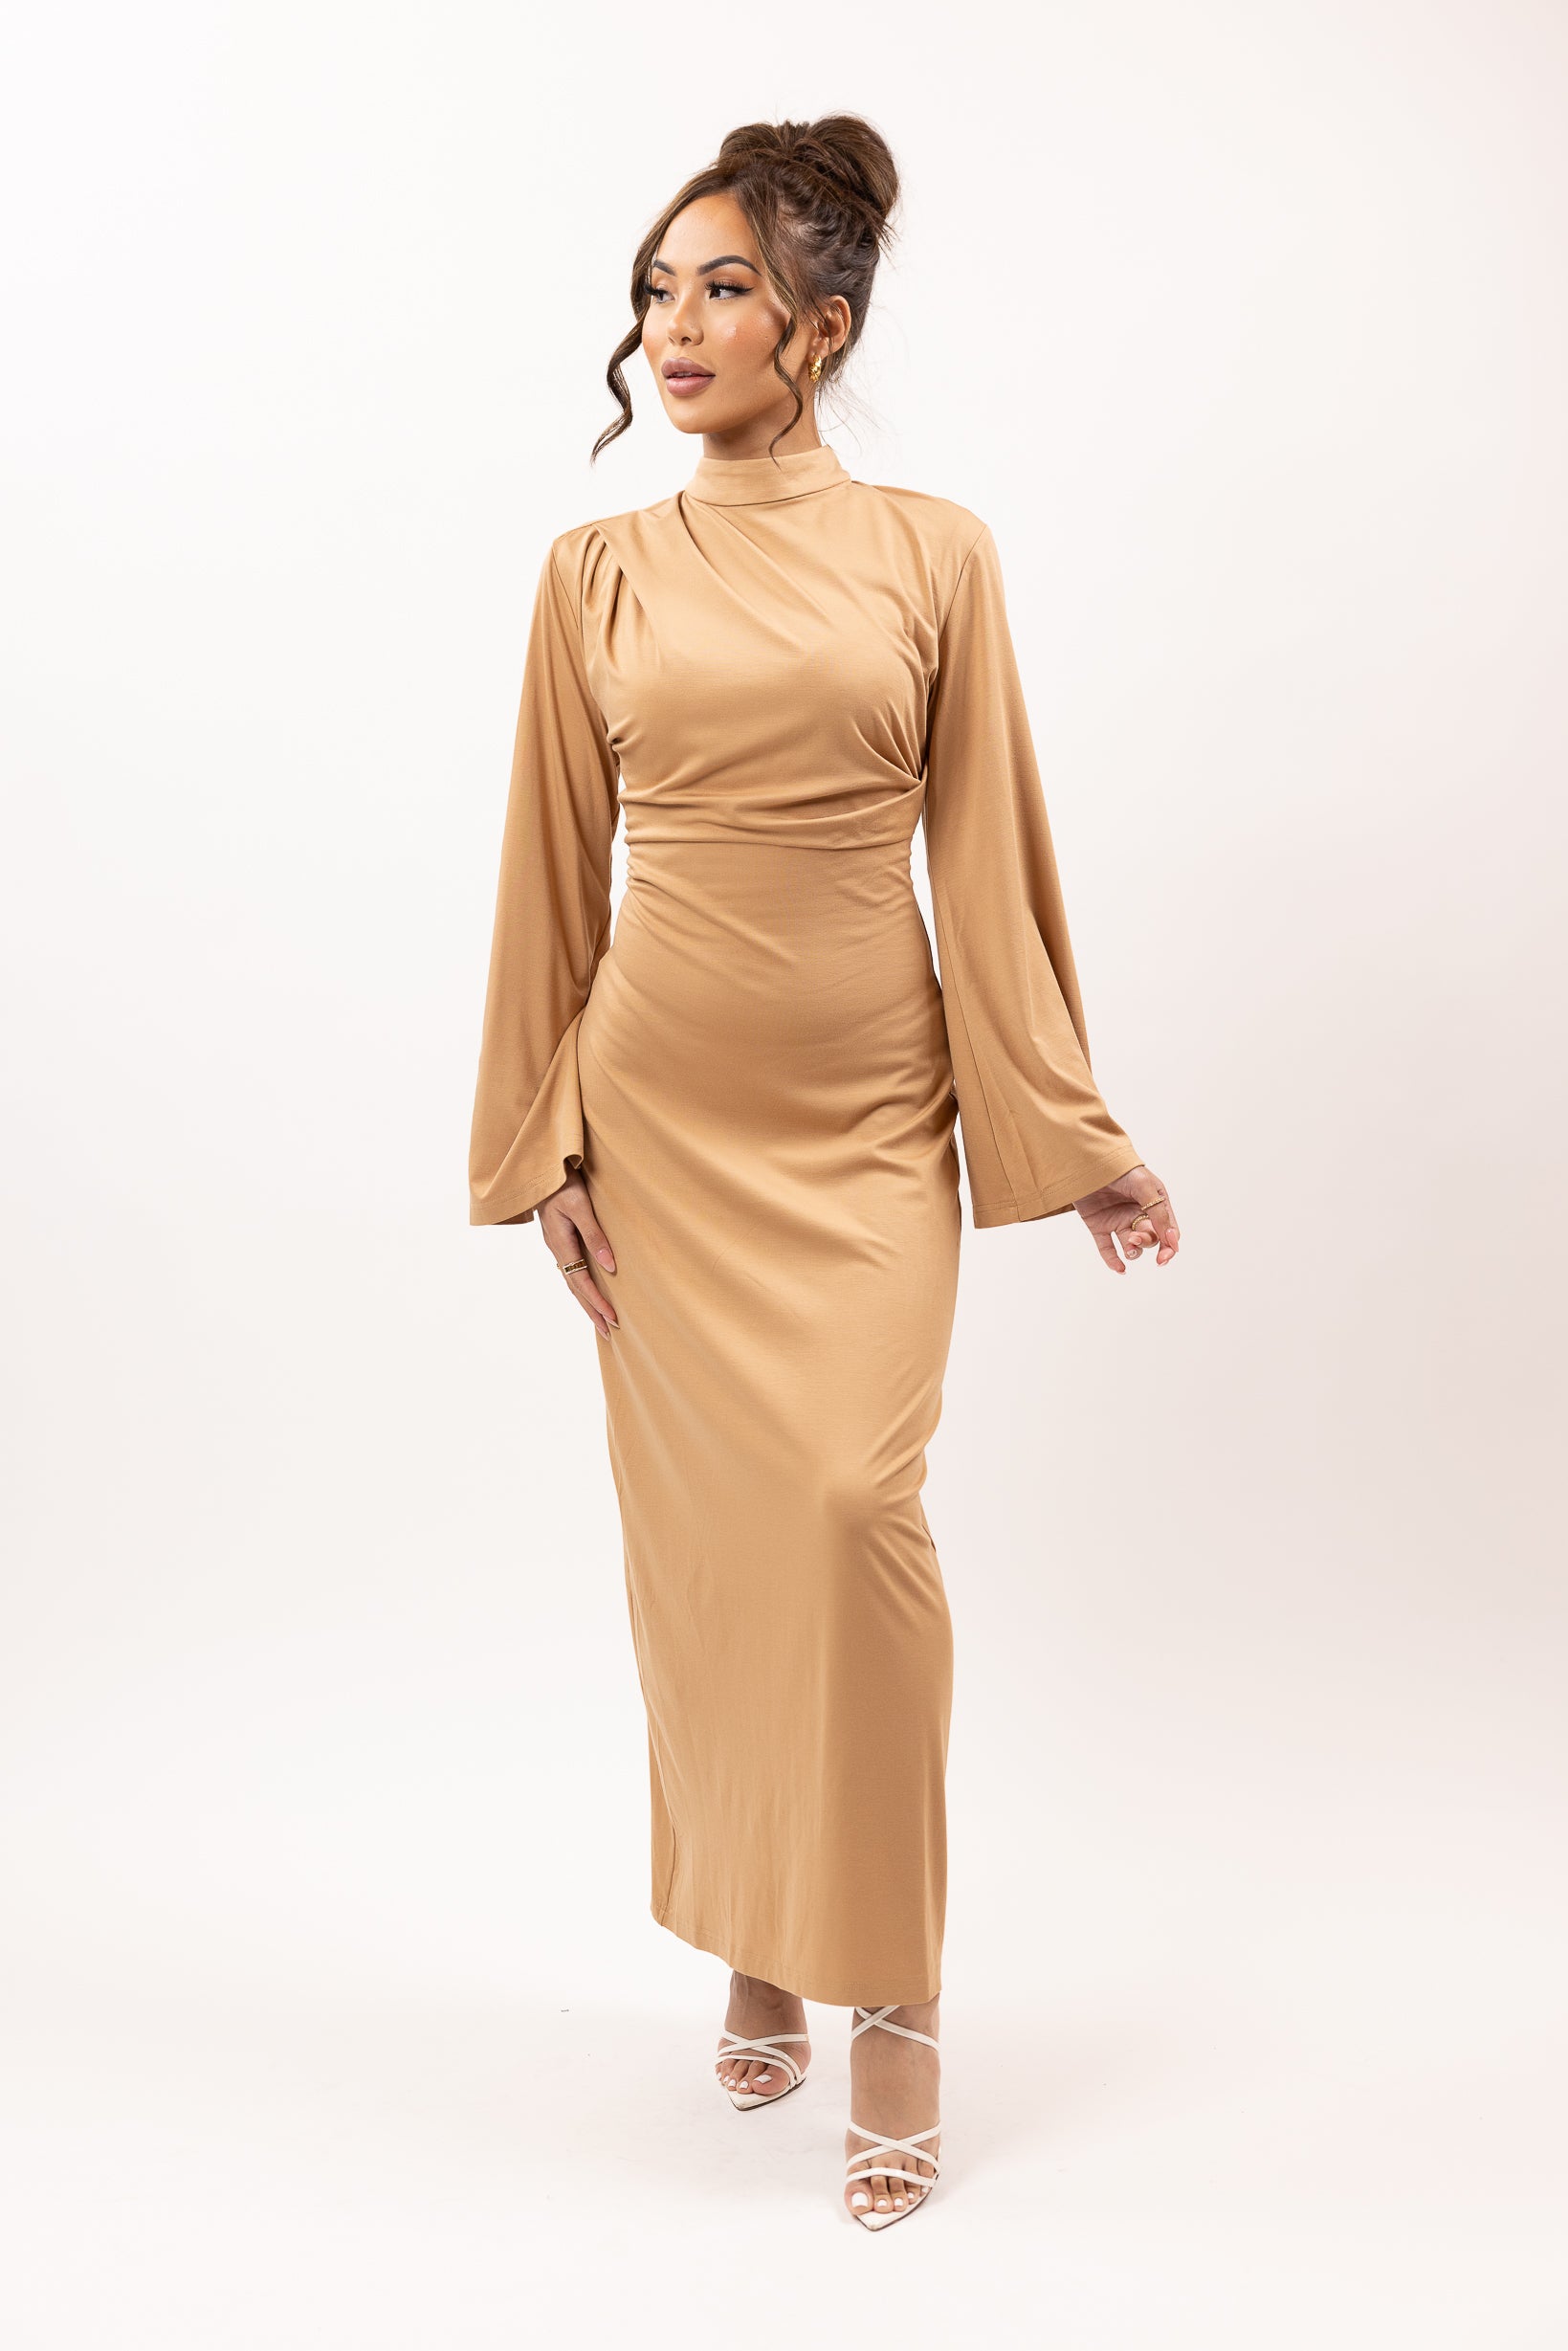 M8461Tan-dress-abaya